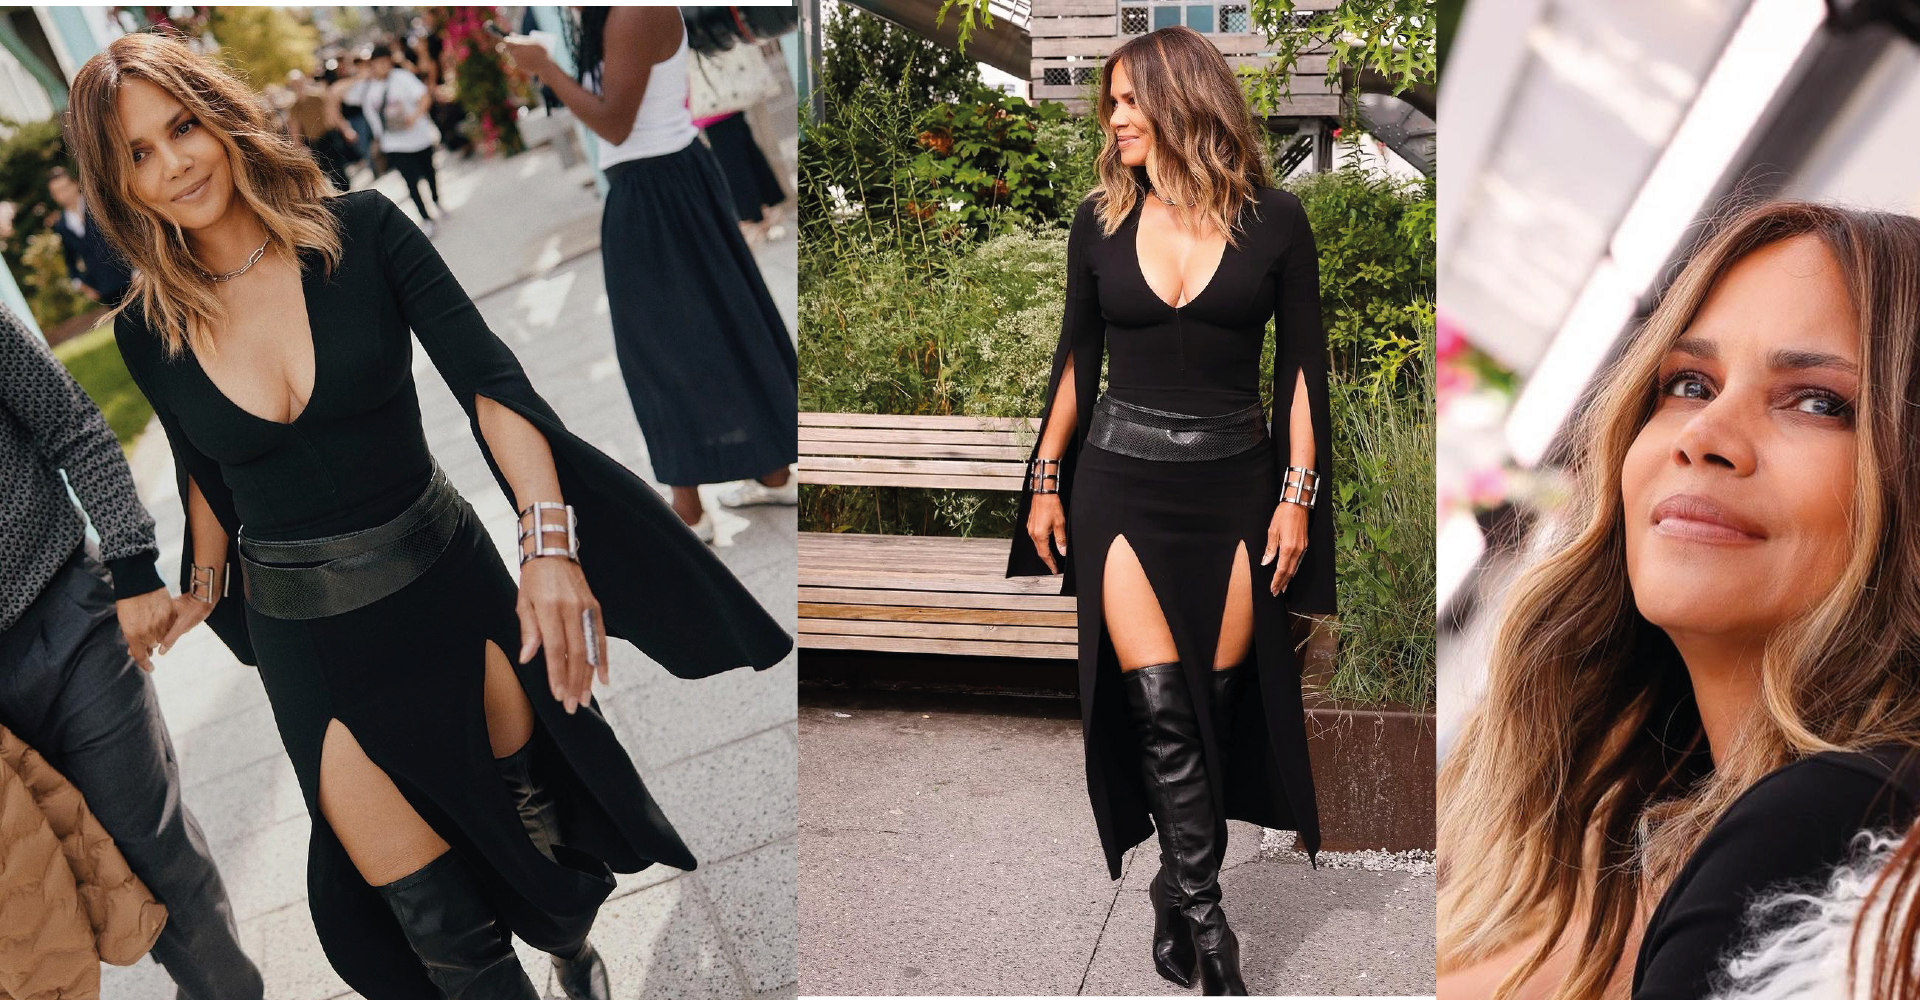 Halle Berry: A Fashion Statement at New York Fashion Week